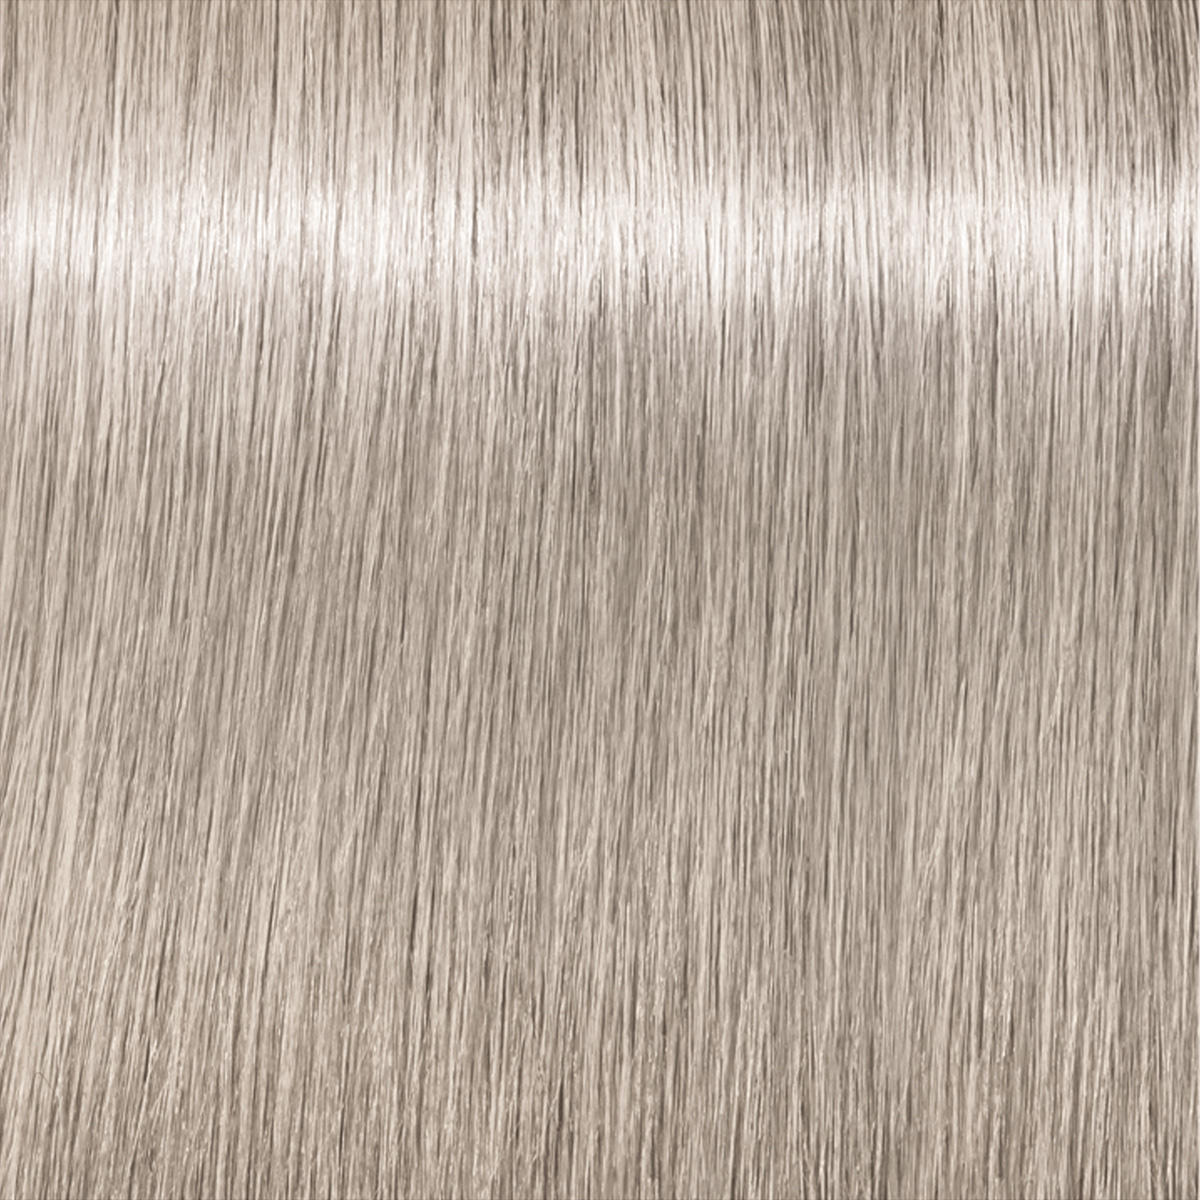 Schwarzkopf Professional IGORA VIBRANCE 9.5-1 Platinum Blonde Cendré, 60 ml - 2